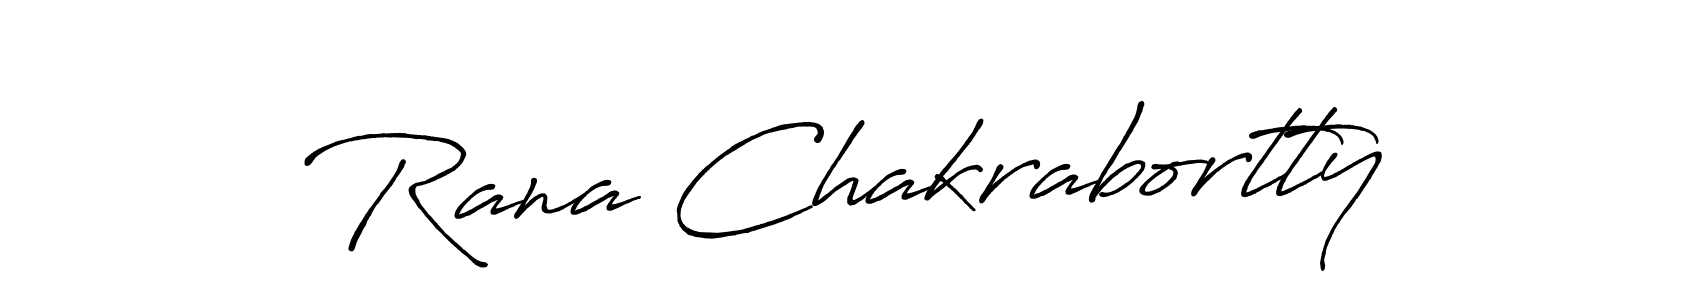 How to Draw Rana Chakrabortty signature style? Antro_Vectra_Bolder is a latest design signature styles for name Rana Chakrabortty. Rana Chakrabortty signature style 7 images and pictures png